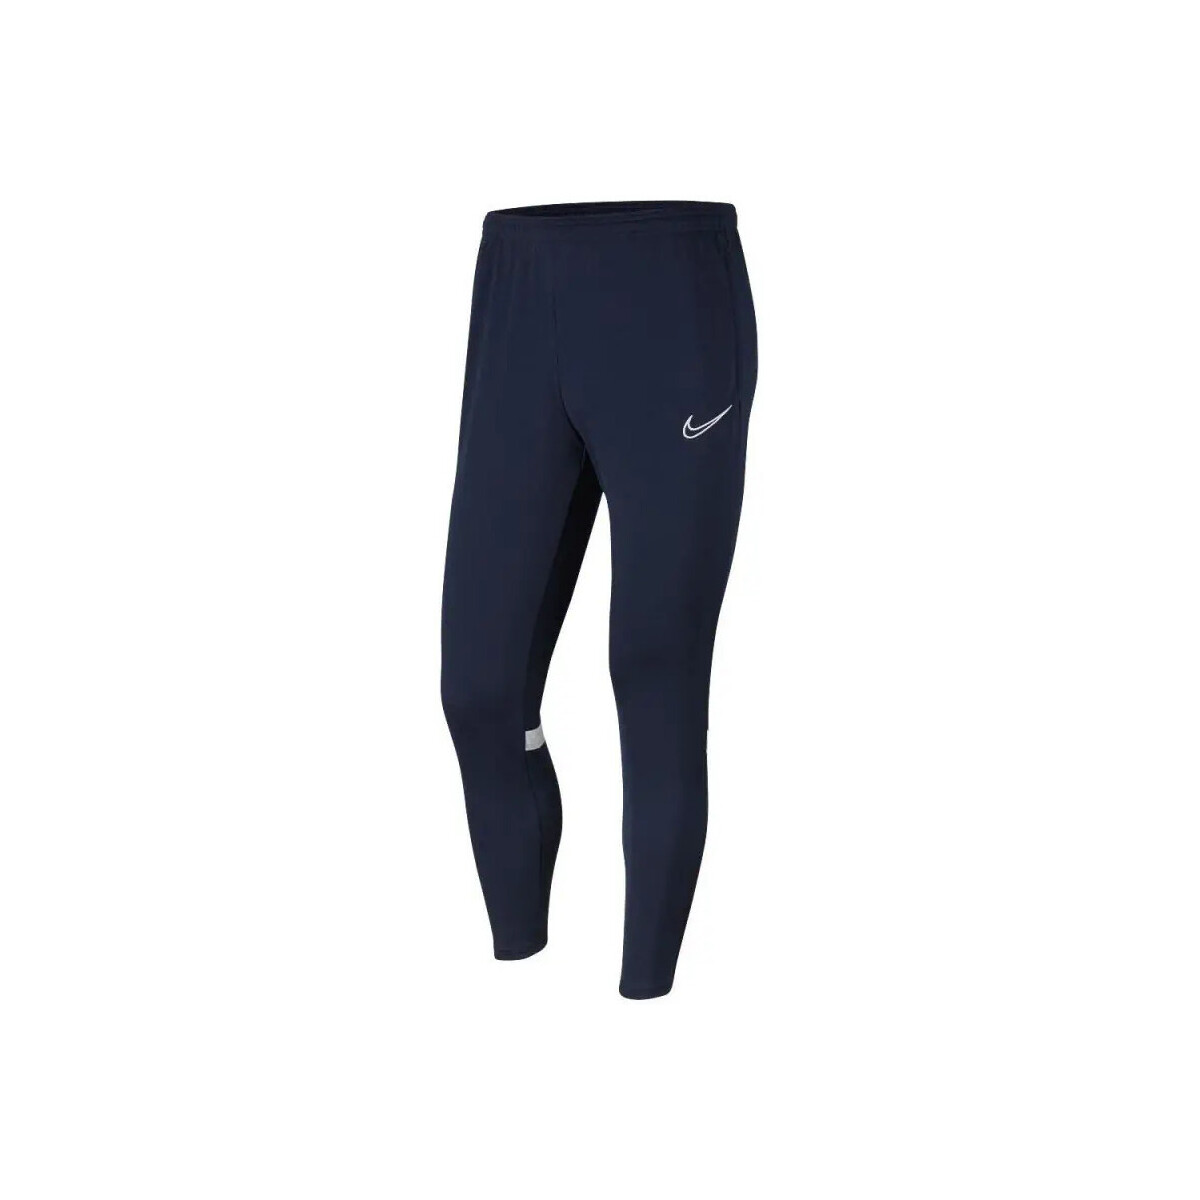 Vêtements Garçon Pantalons de survêtement Nike JOGGING  DRI FIT BLUE Bleu